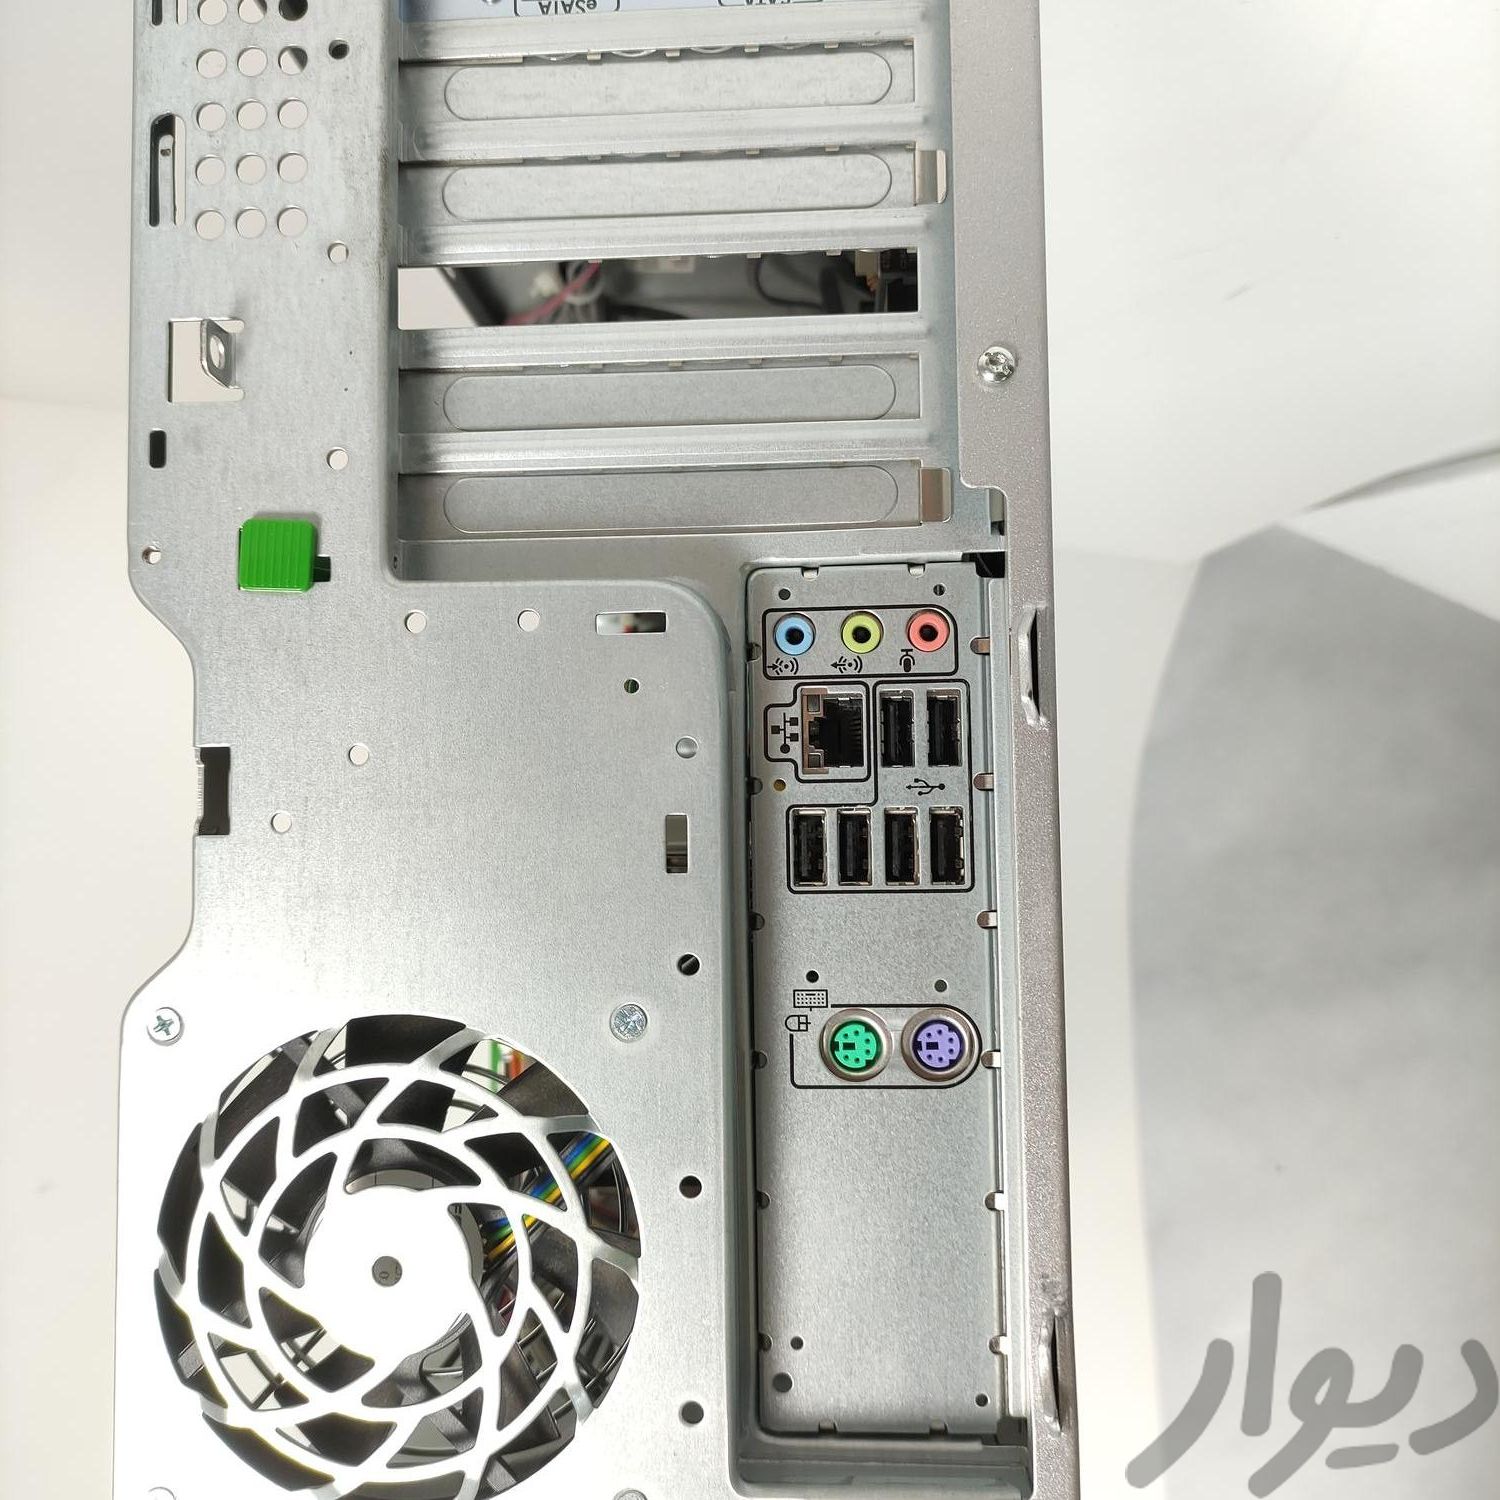 کیس ورک استیشن Workstation Hp Z400 Z600|رایانه رومیزی|تهران, میدان ولیعصر|دیوار